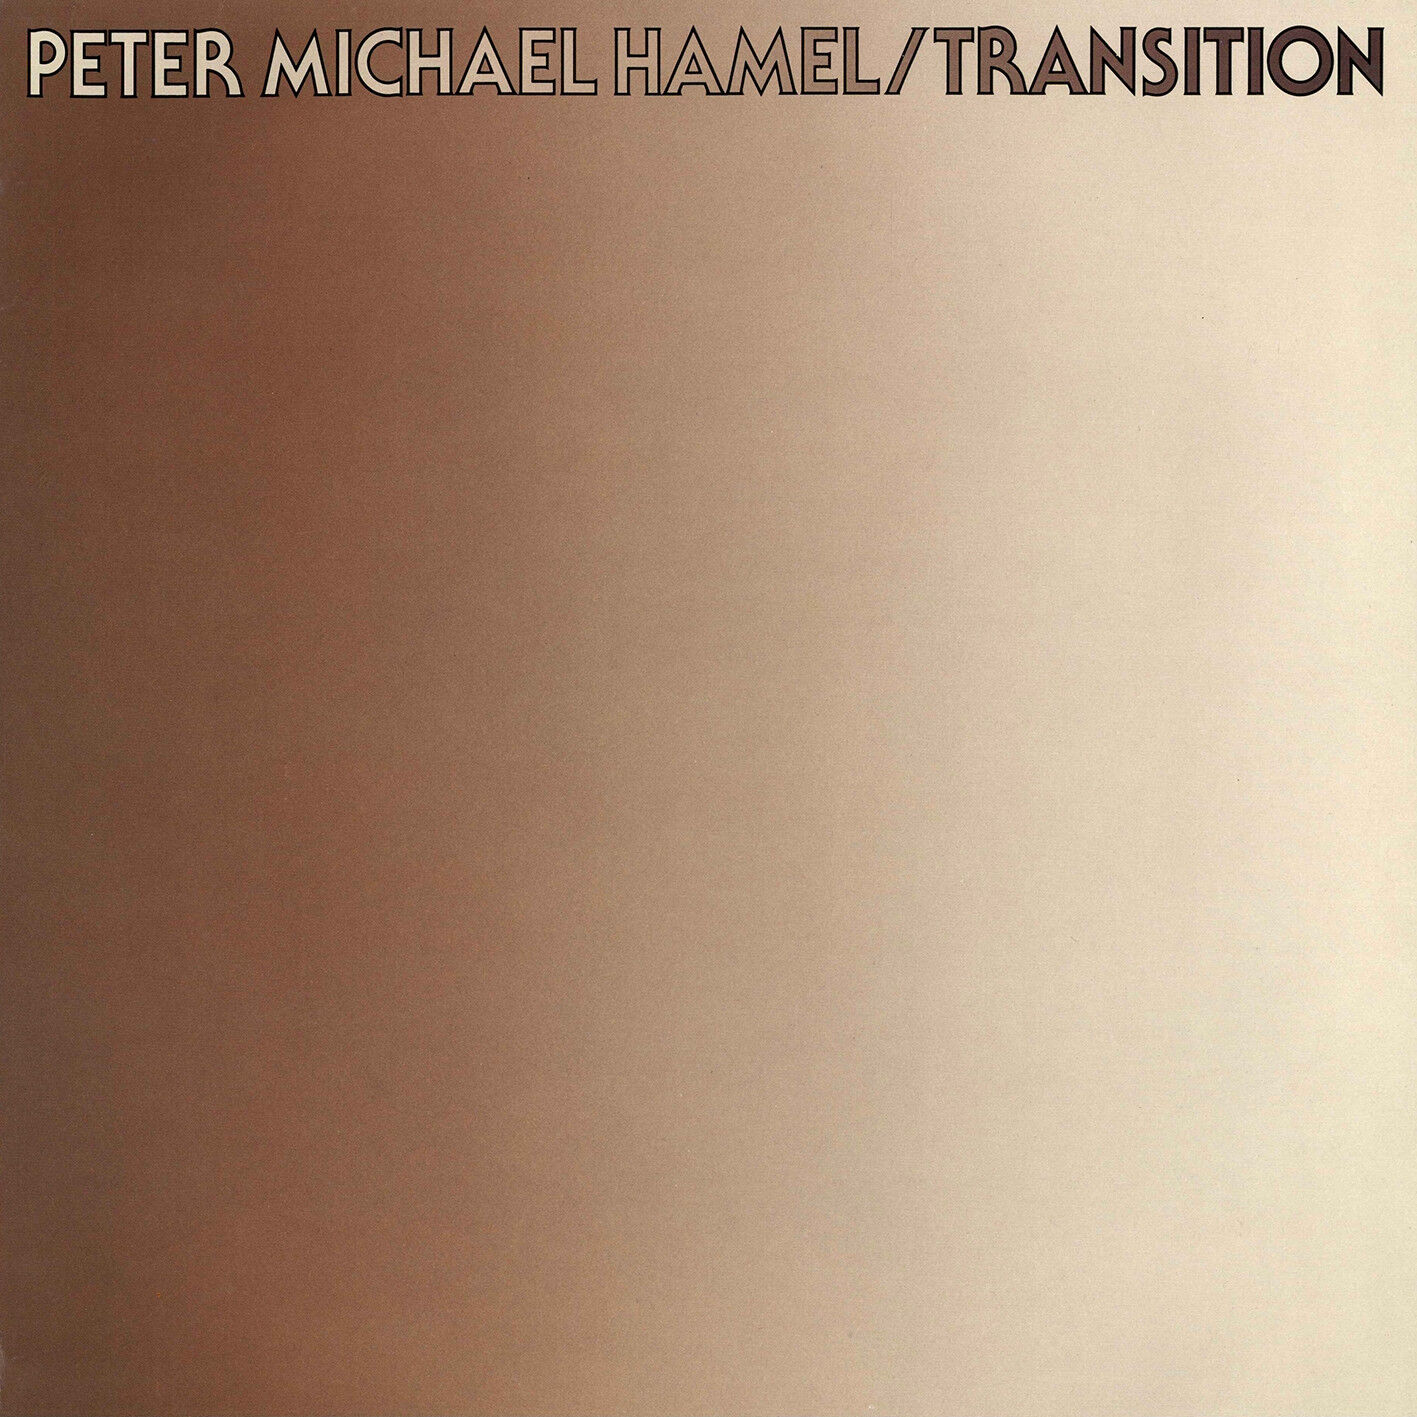 TRANSITION (2 CD) - PETER MICHAEL HAMEL